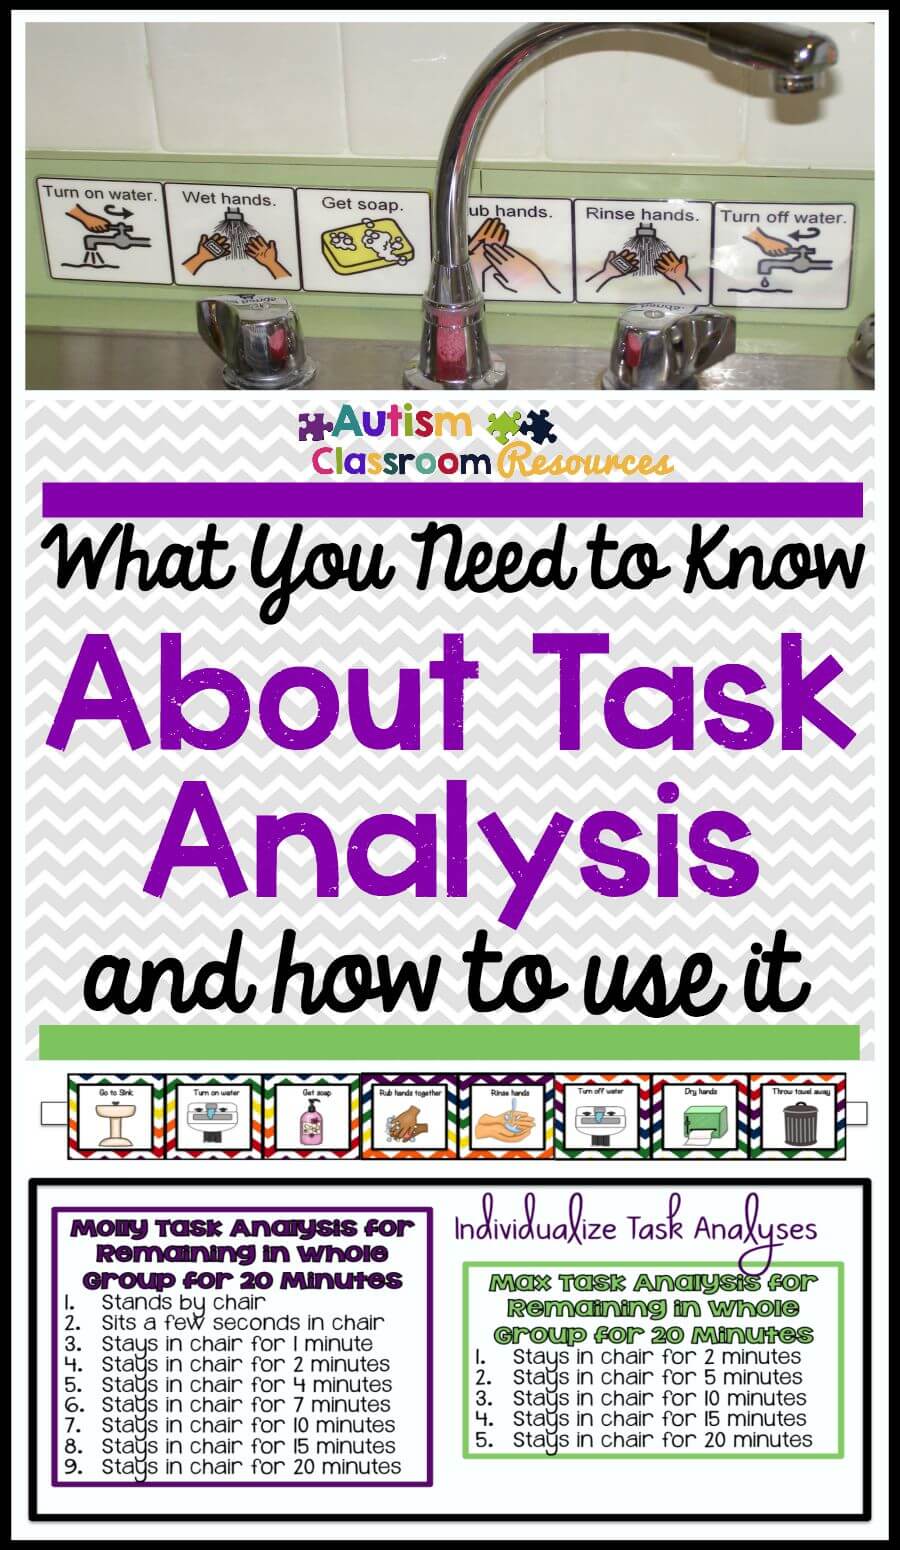 define task analysis in education